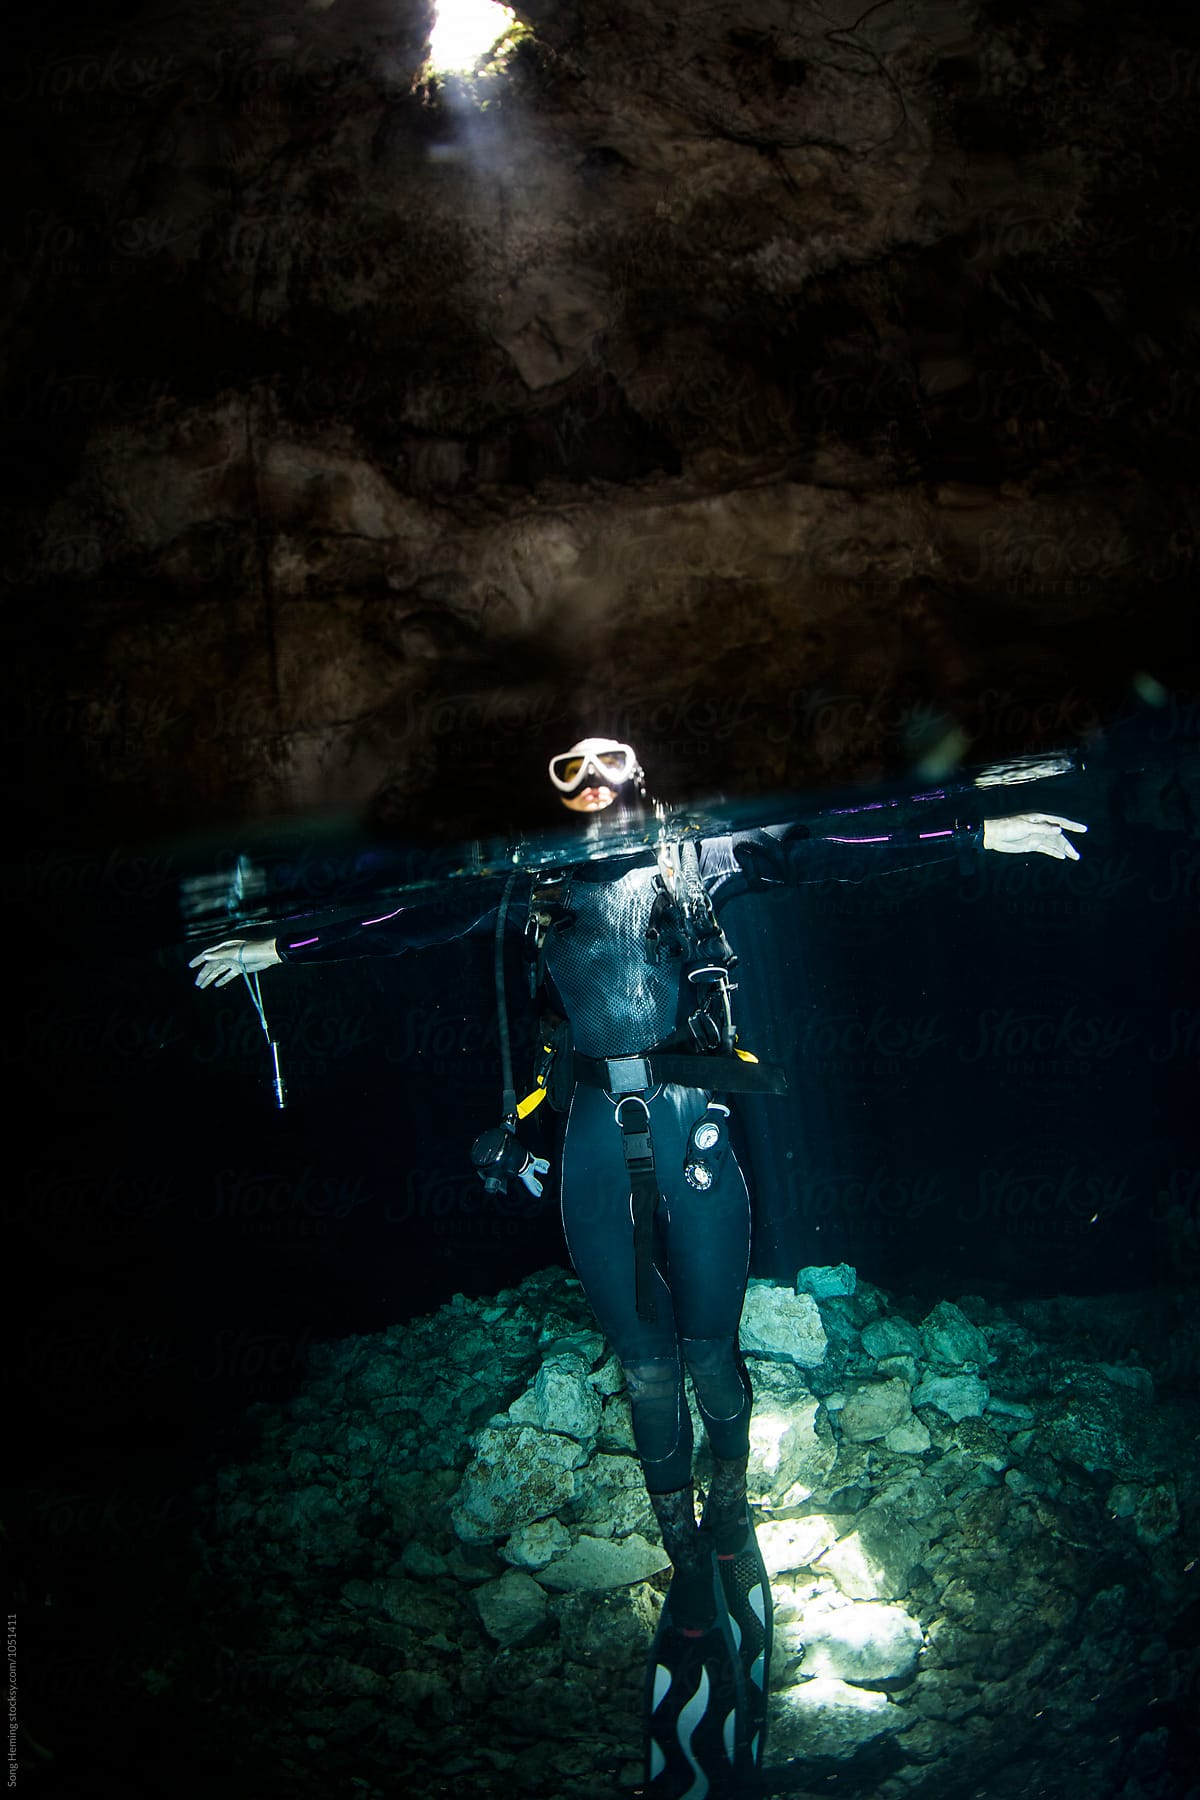 A scuba diver floating on surface in Mexico's Tajma ha Cenote